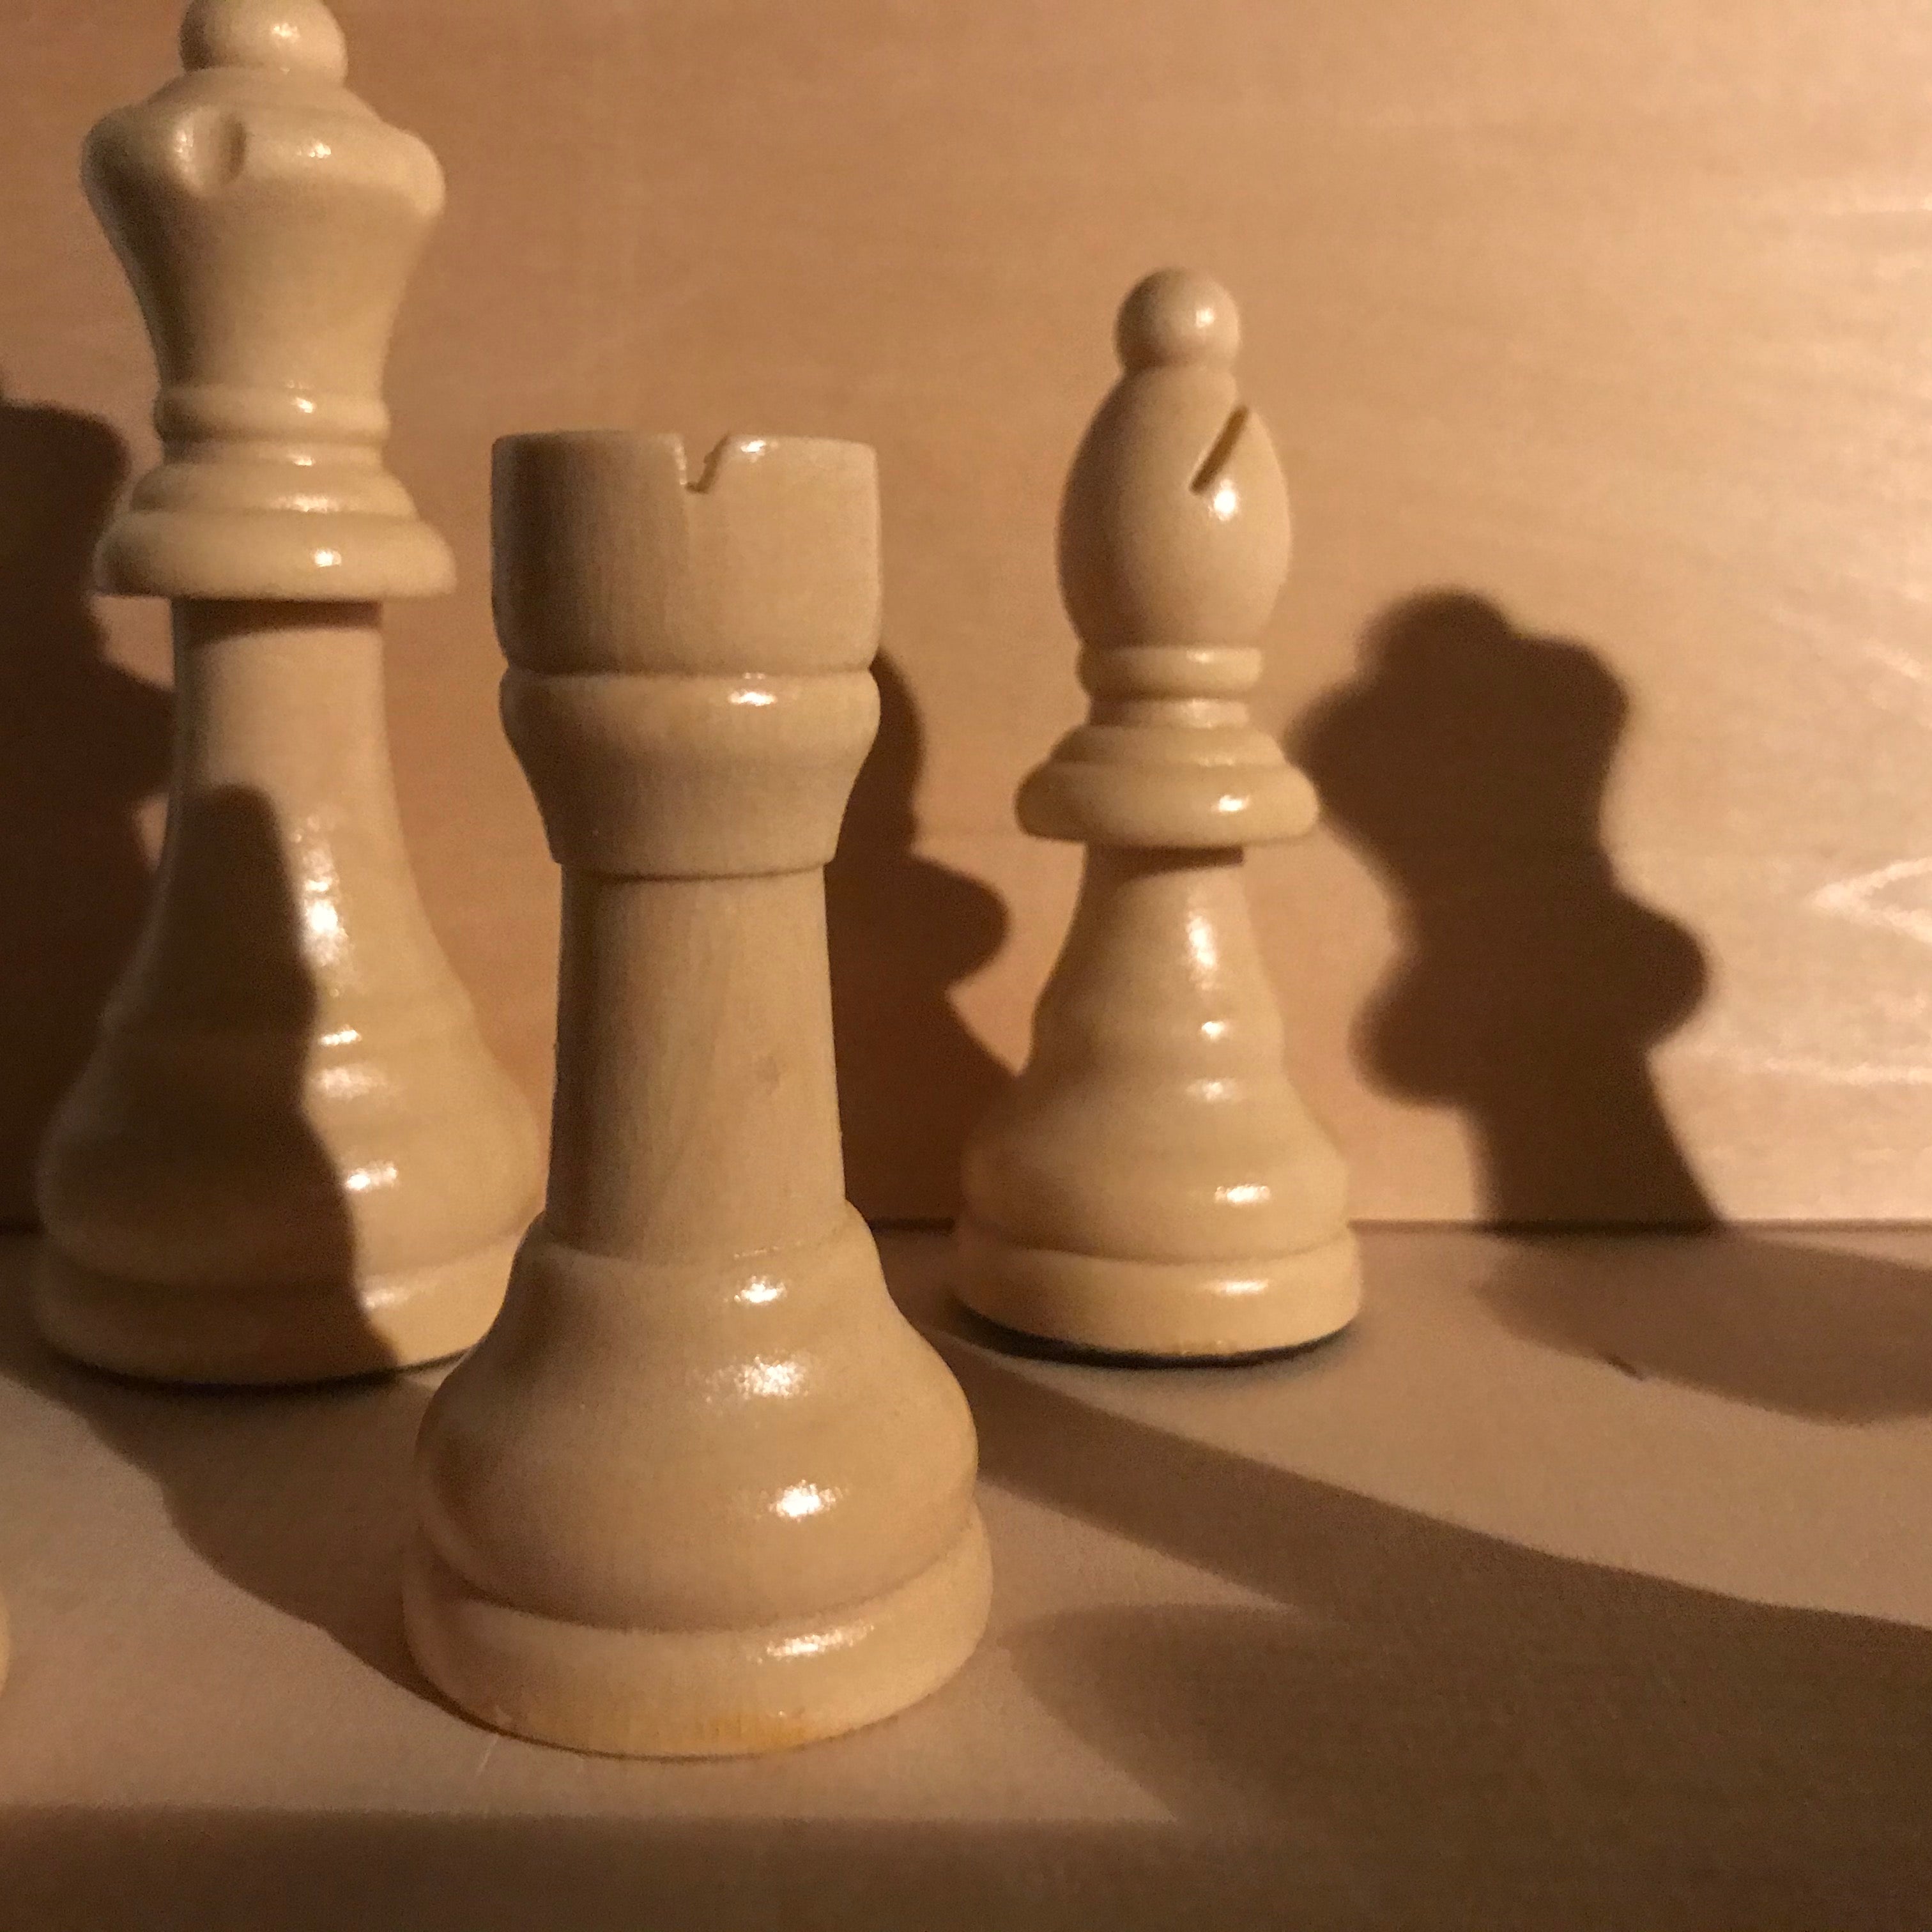 Classico Chess Piece Set